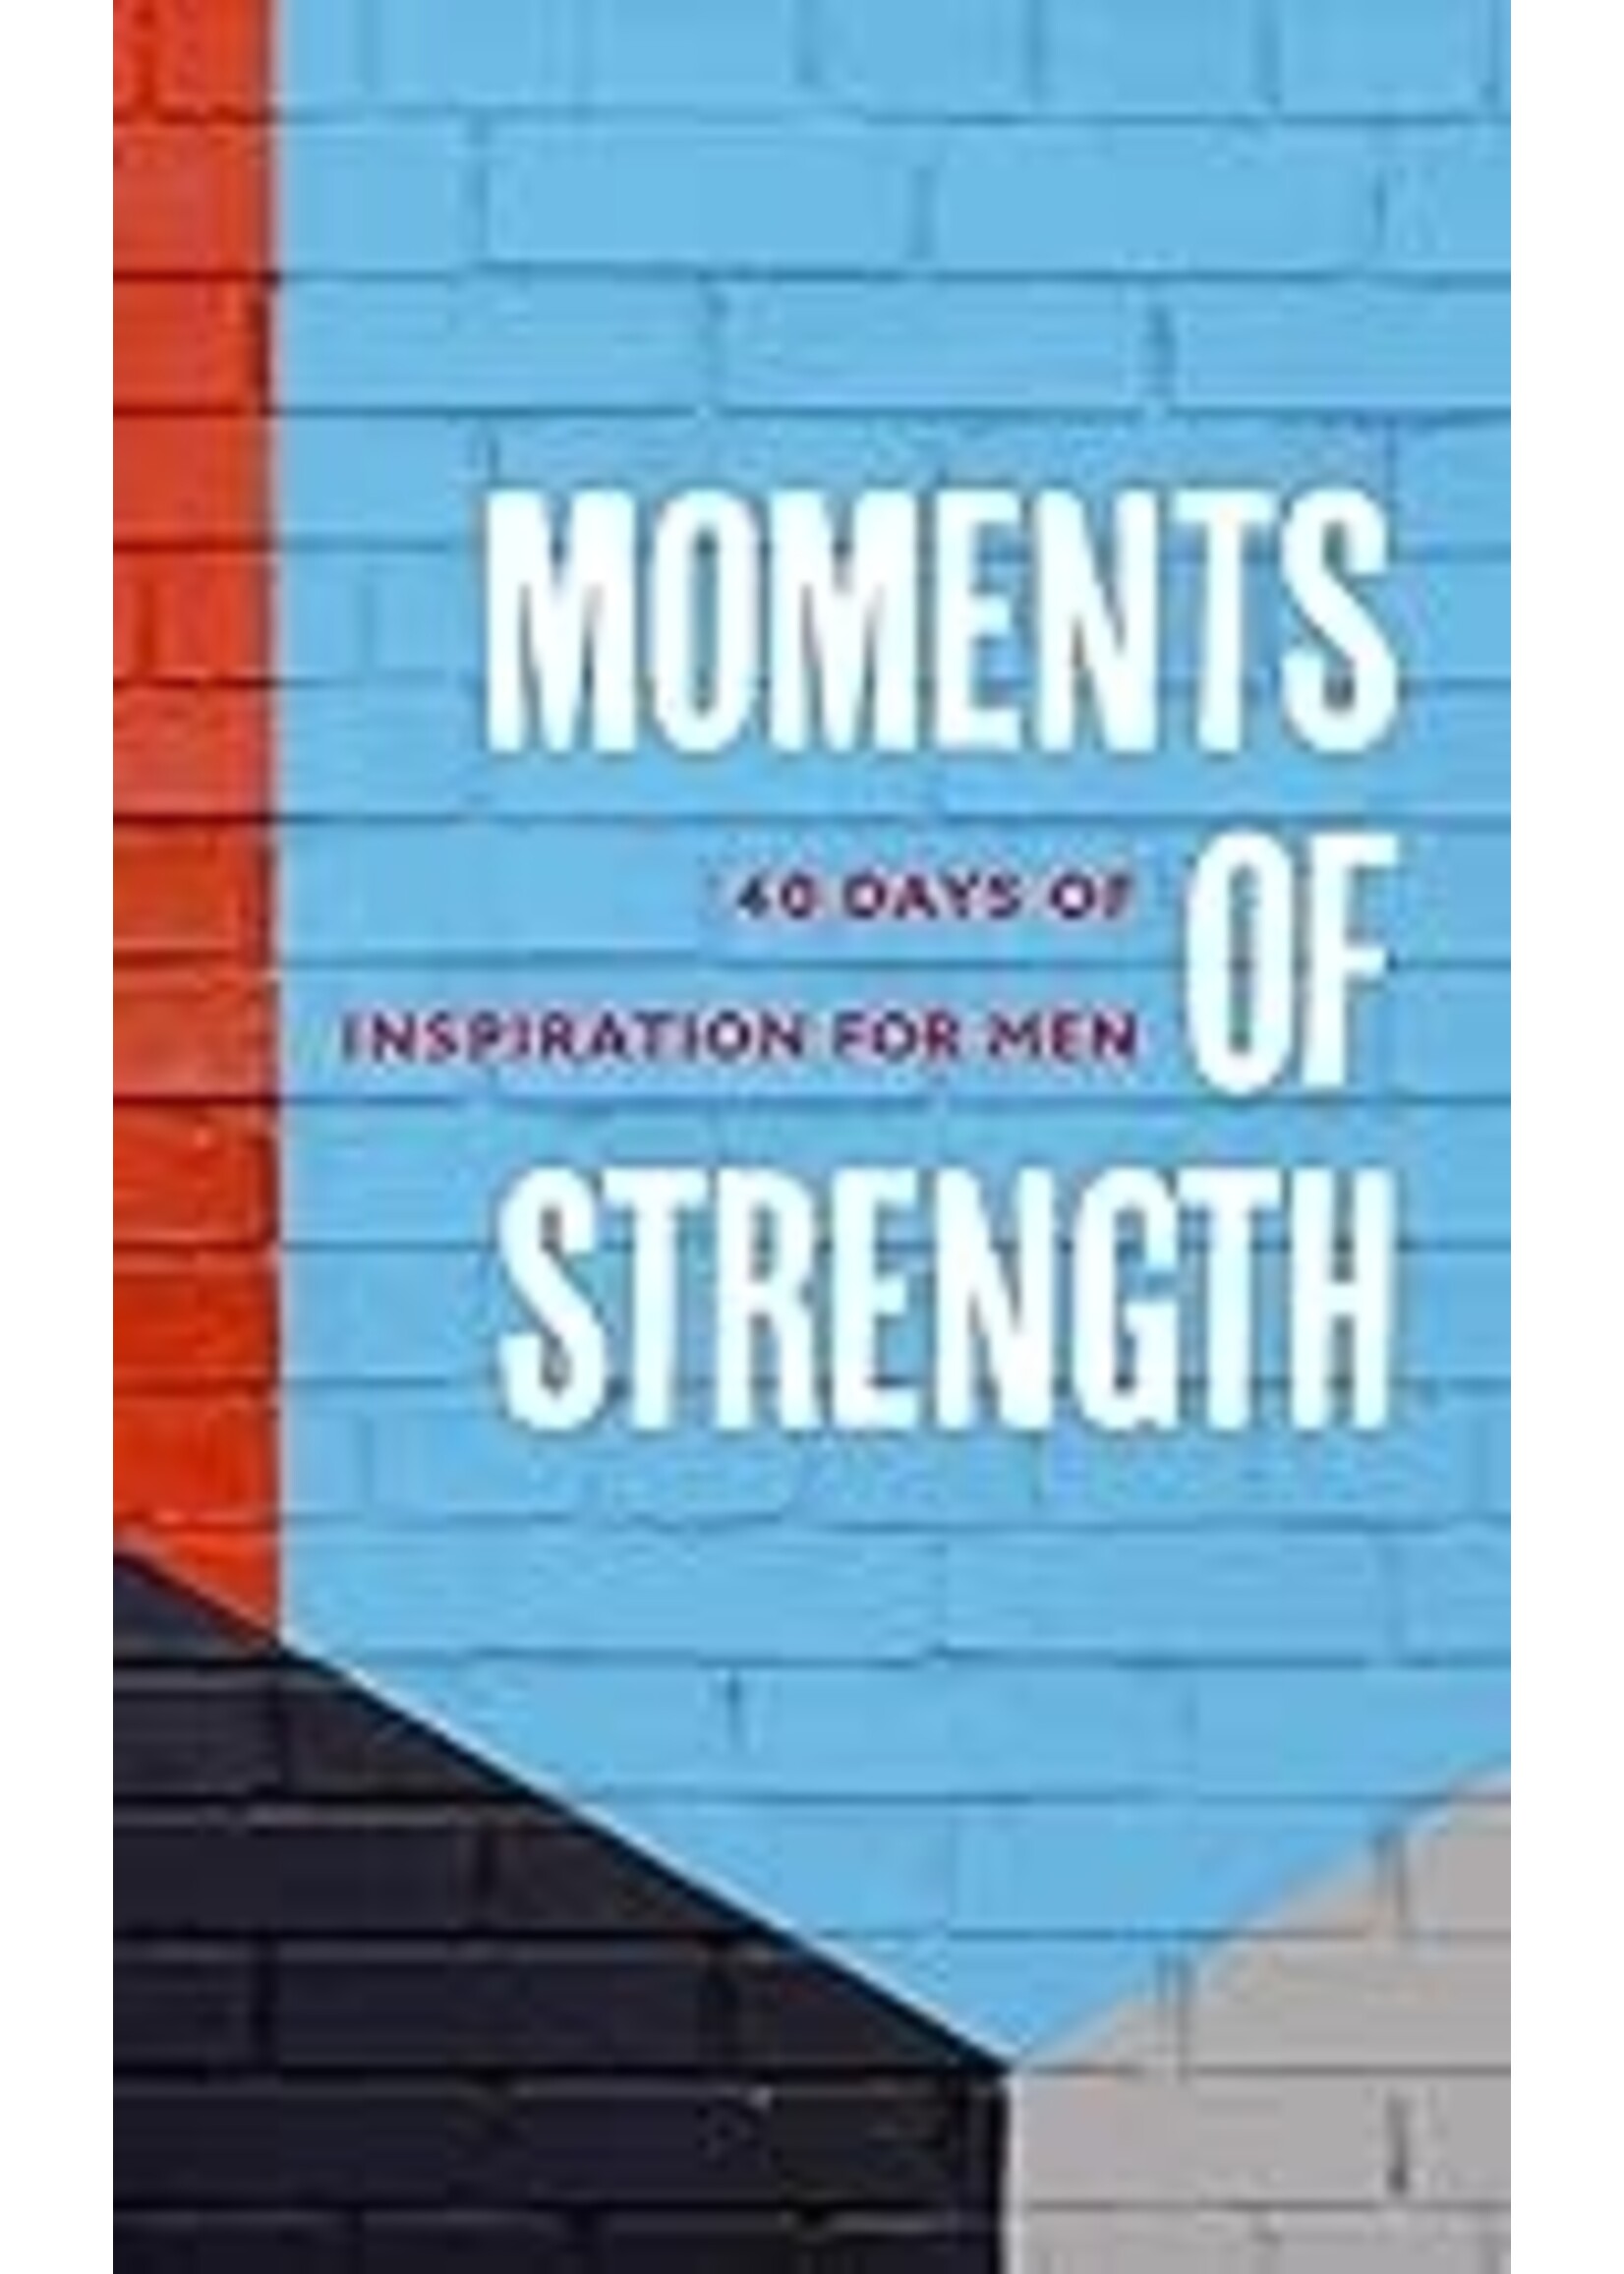 Moments of Strength 40 Days Inspiration Men